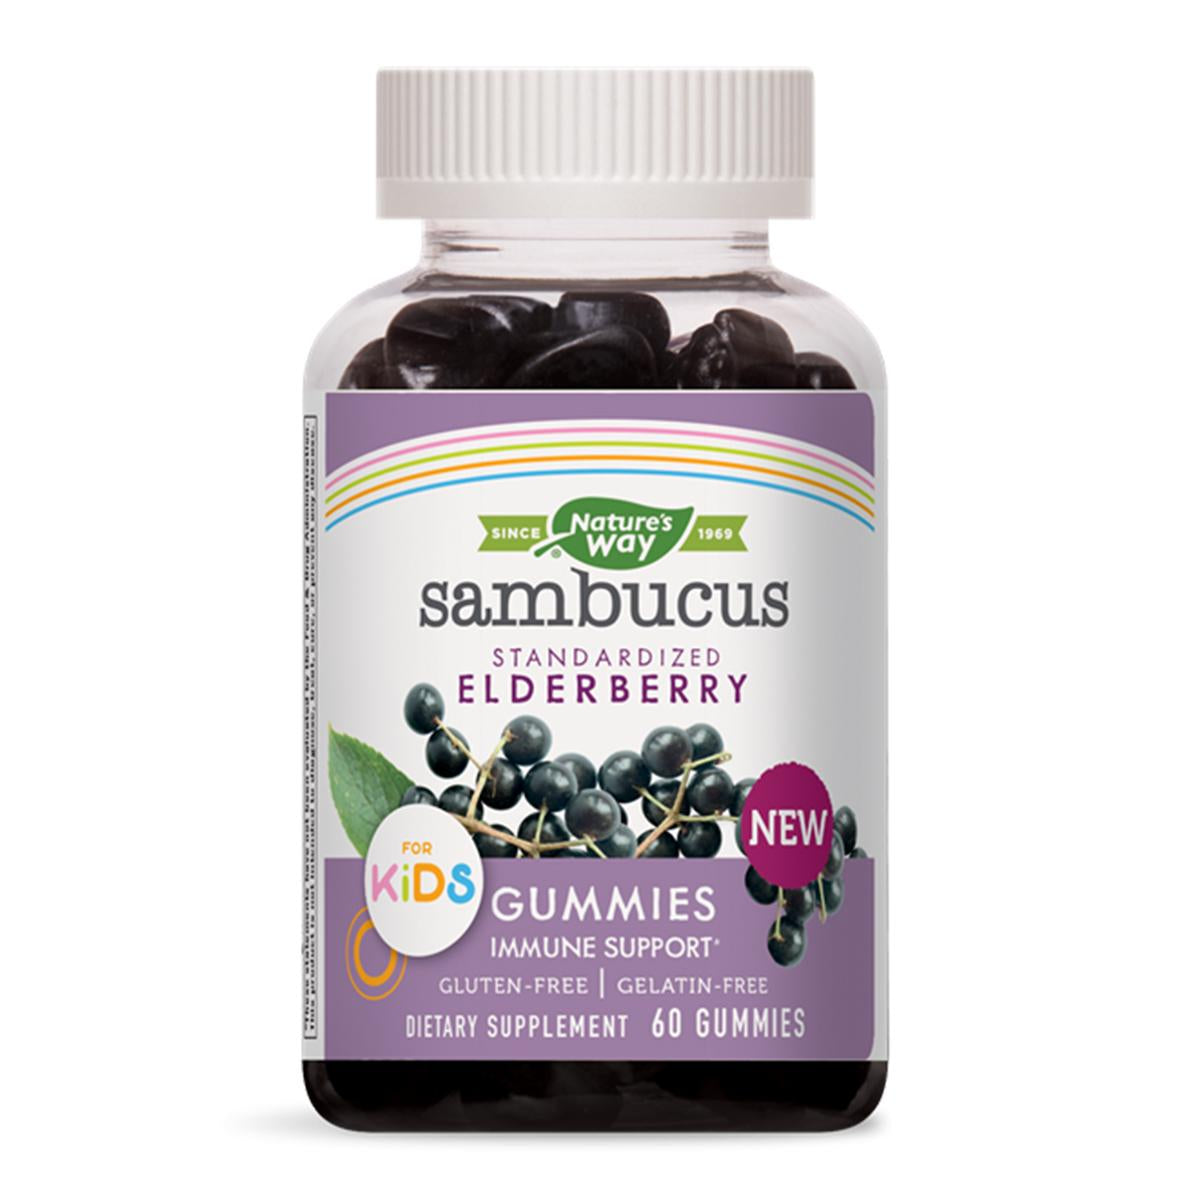 Primary image of Sambucus Gummies for Kids